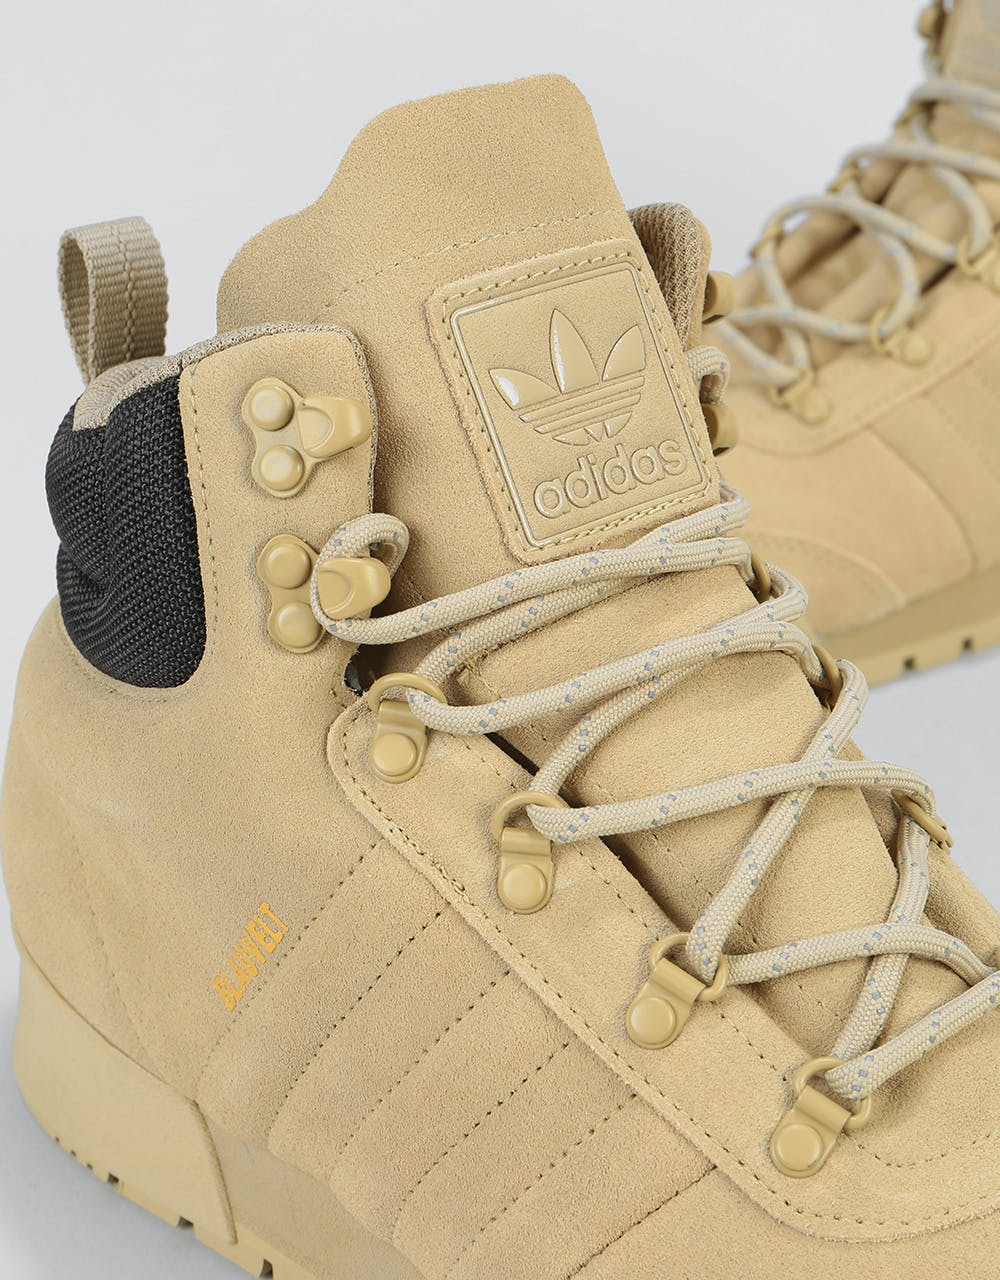 Adidas Jake Boot 2.0 - Raw Gold/Core Black/Gold Metallic